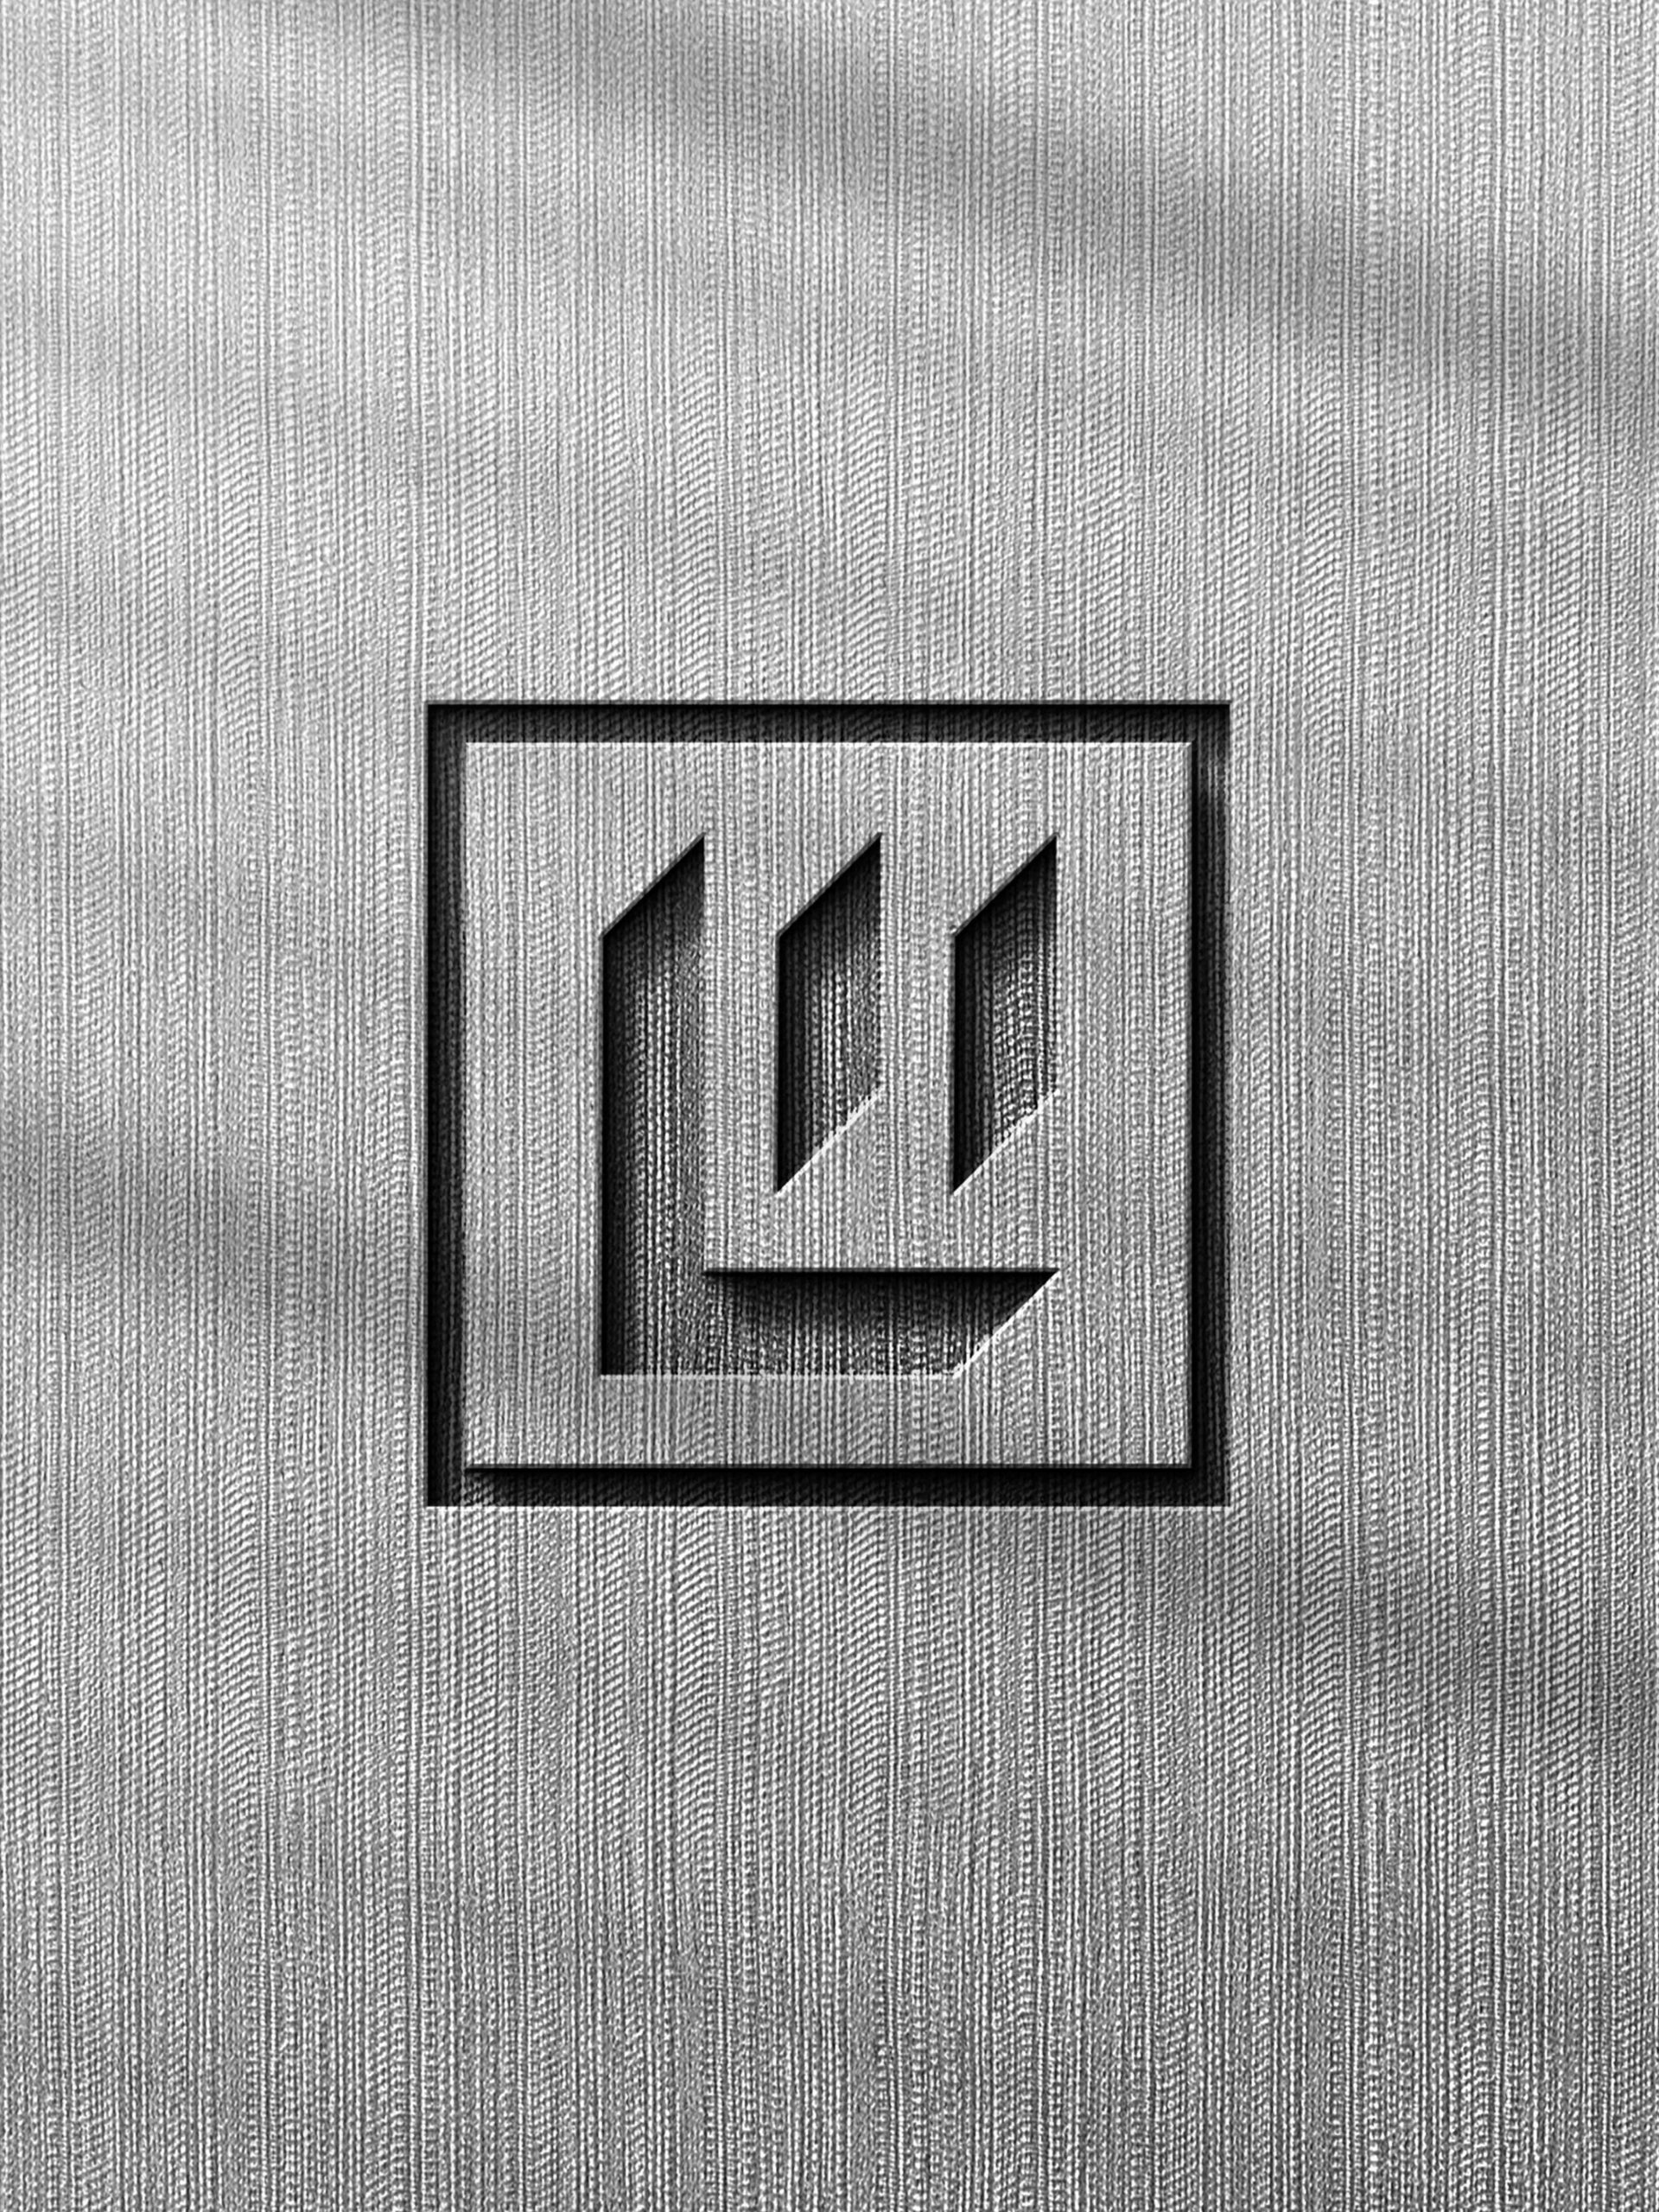 Lotusmind Branding Logo Embossed On Material